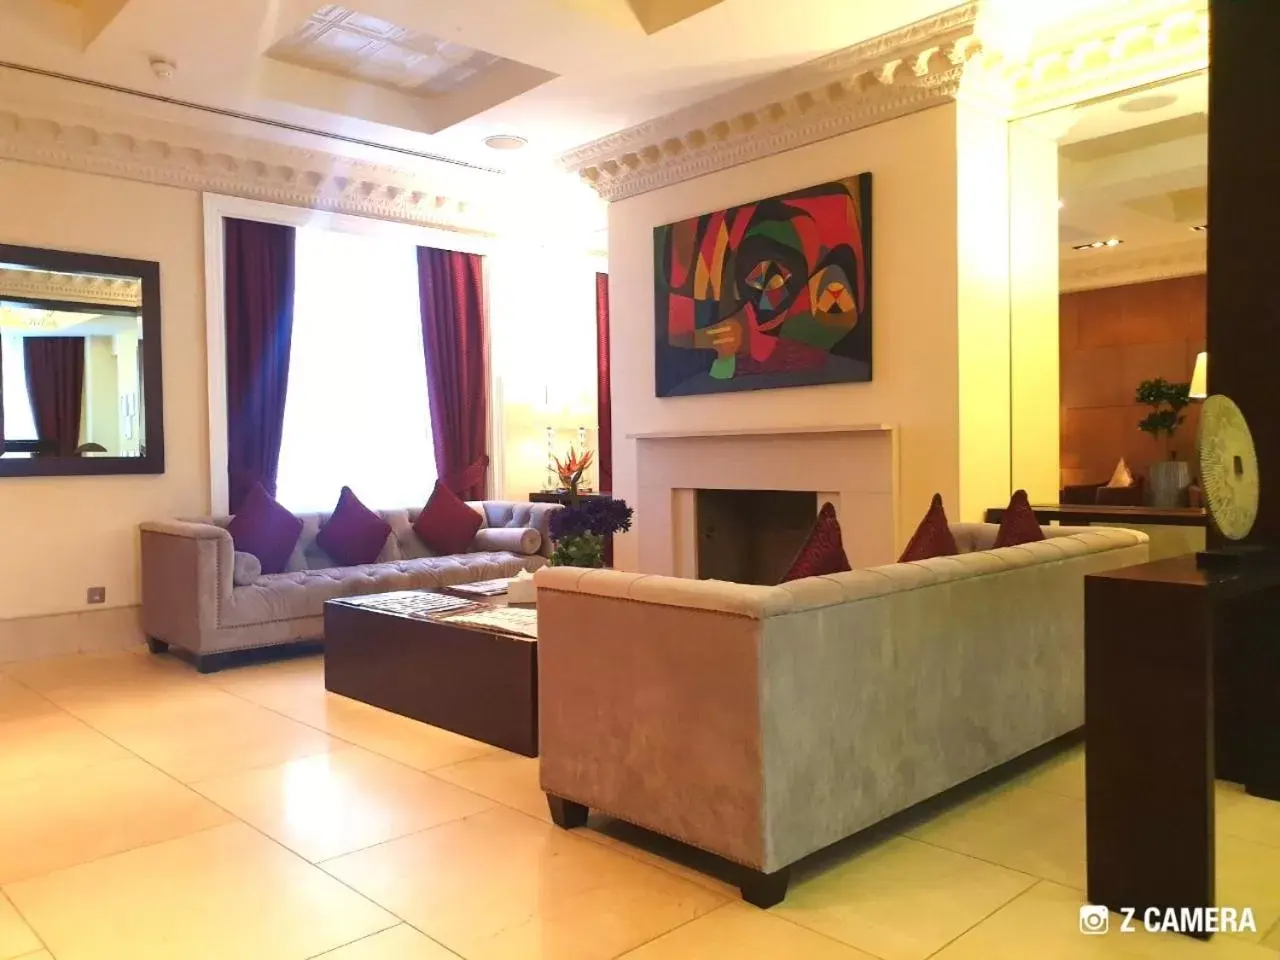 Lobby or reception, Lobby/Reception in The Park City Grand Plaza Kensington Hotel